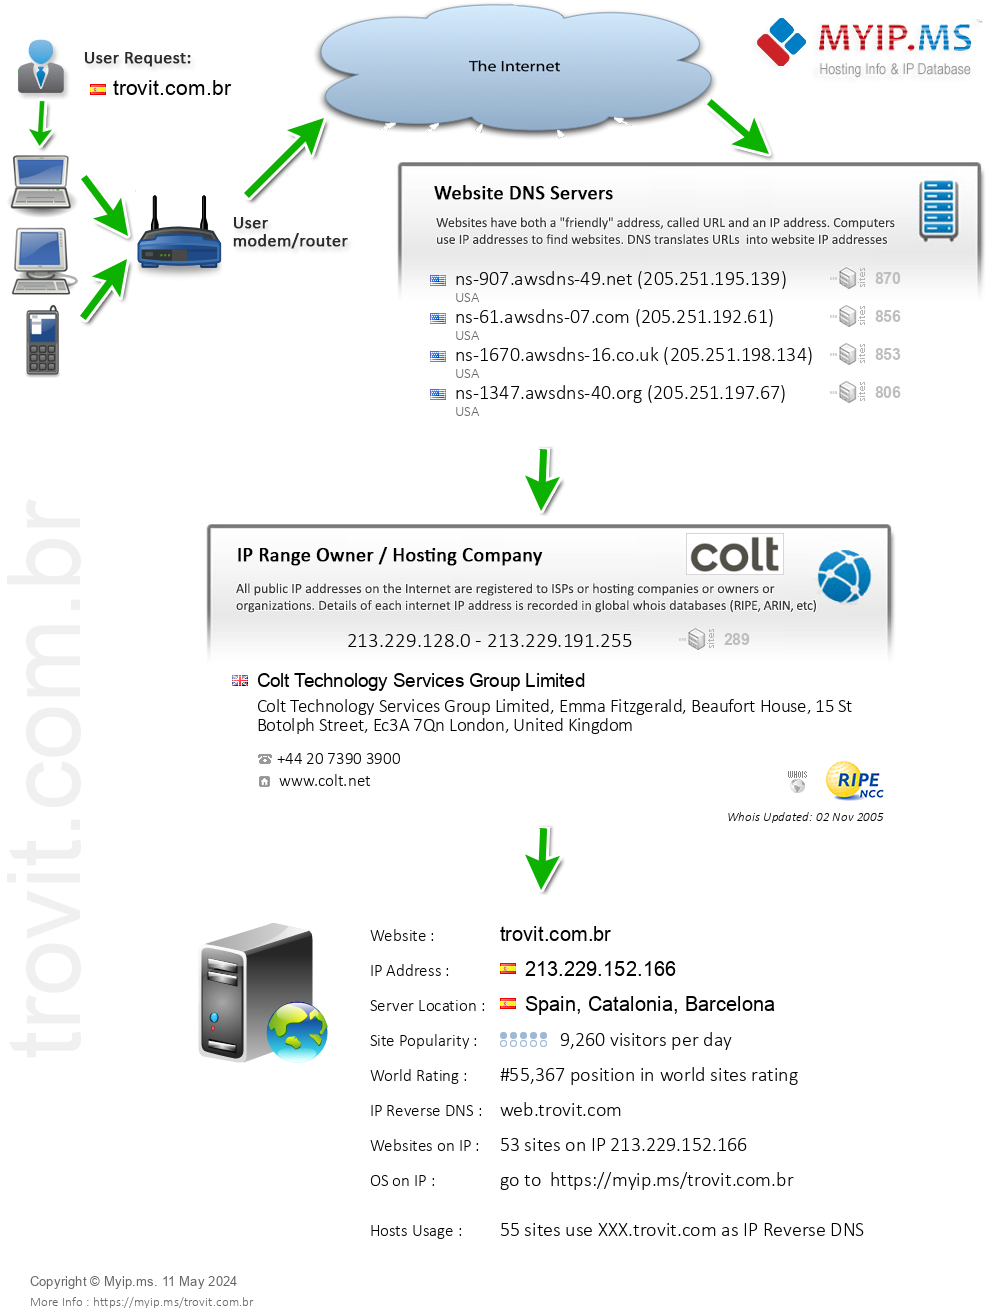 Trovit.com.br - Website Hosting Visual IP Diagram